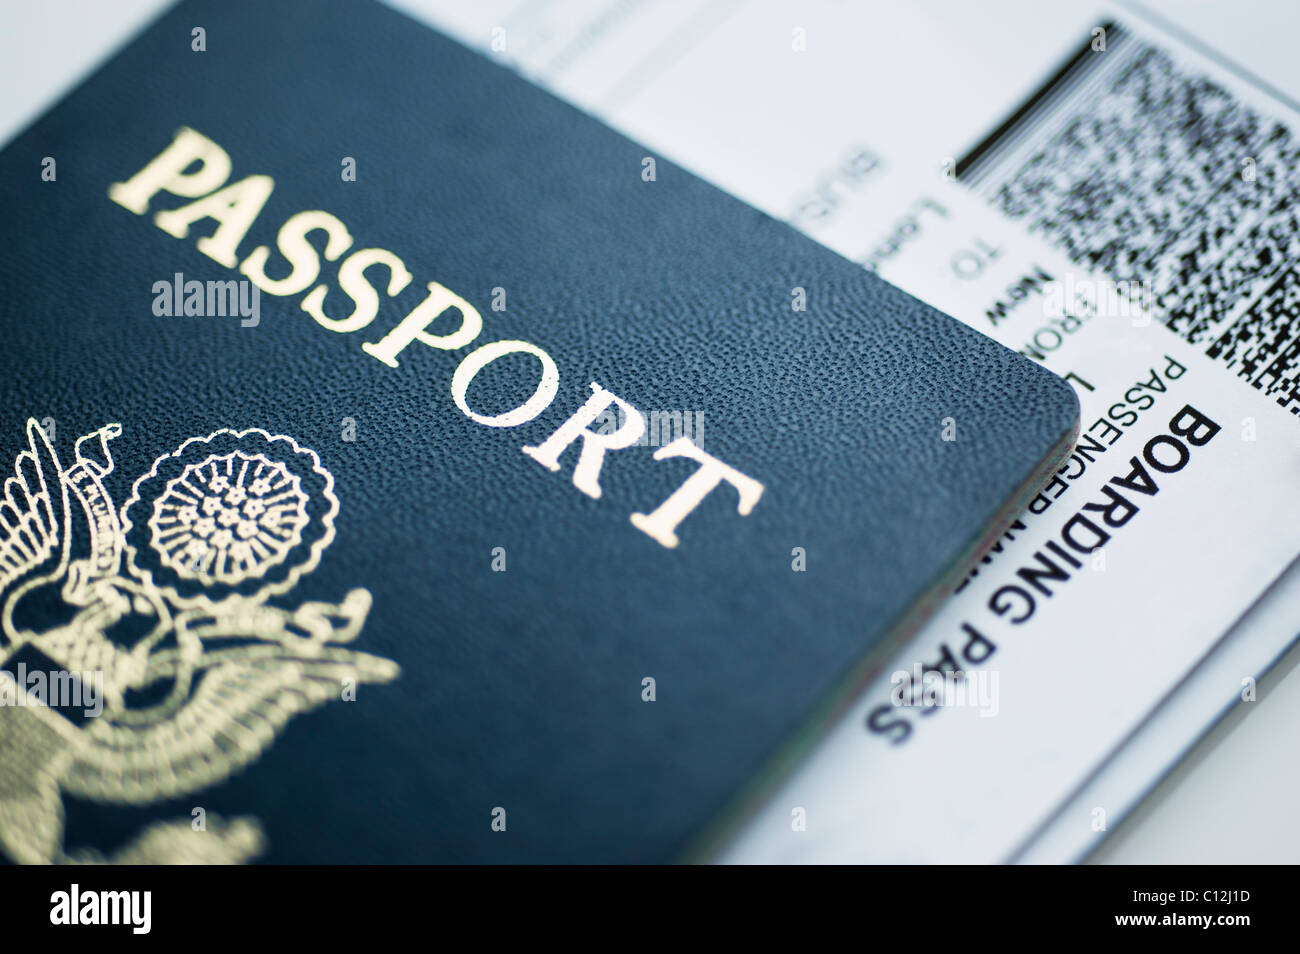 American passport with boarding pass inside Stock Photo